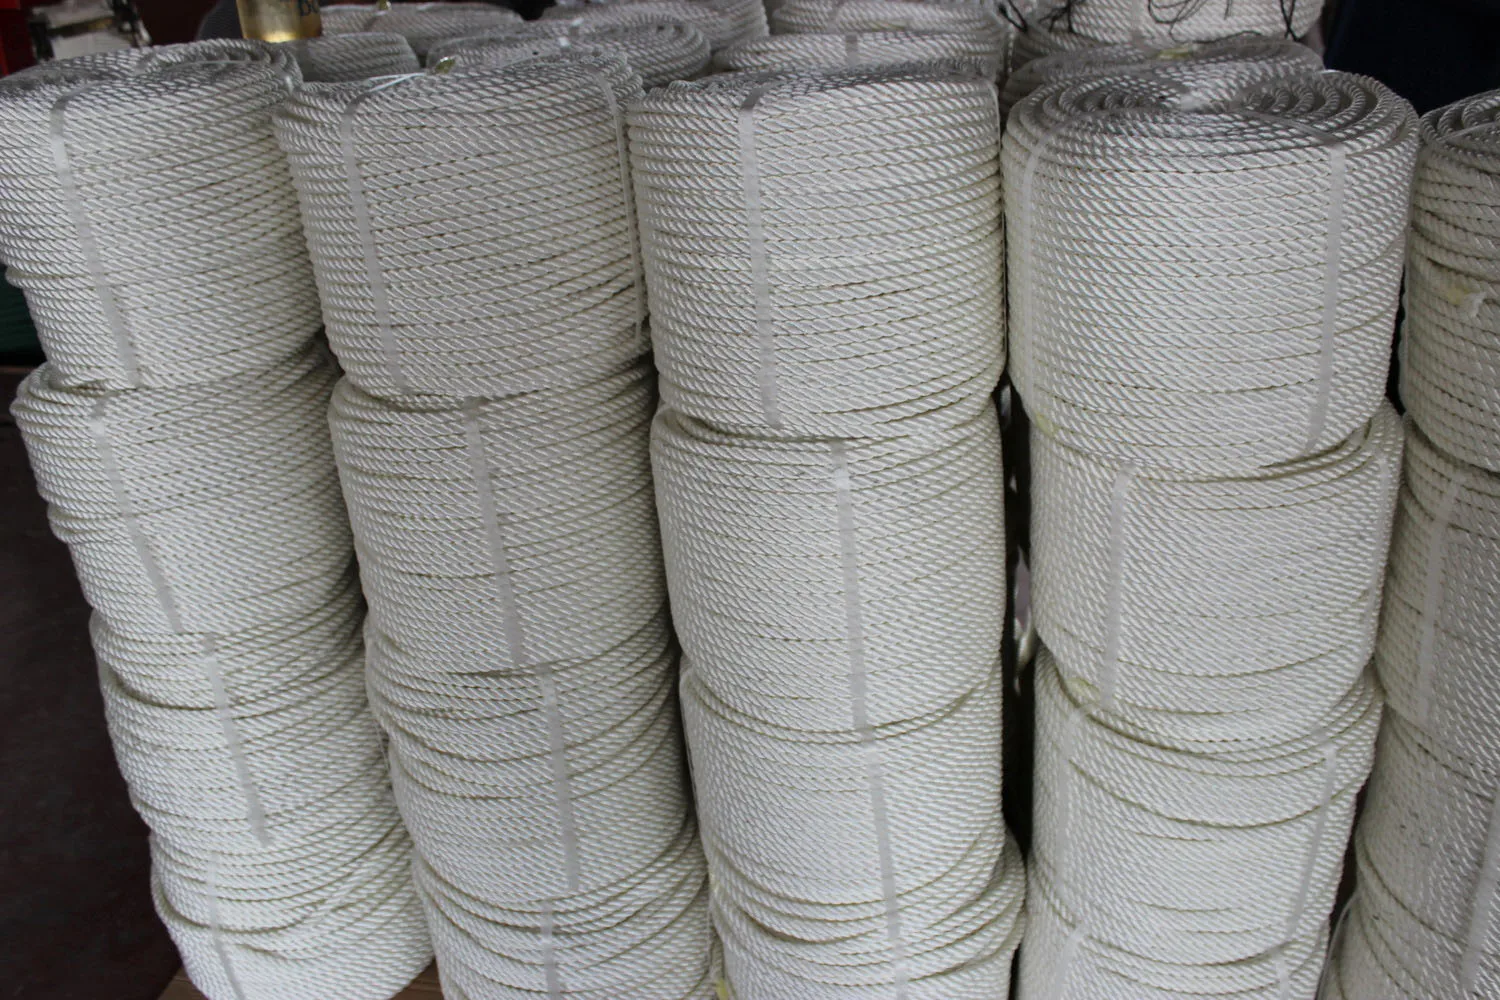 Wholesale Corde tordue en polyester/PP/Nylon, corde d'emballage, 3 brins,  3-60mm, livraison gratuite From m.alibaba.com